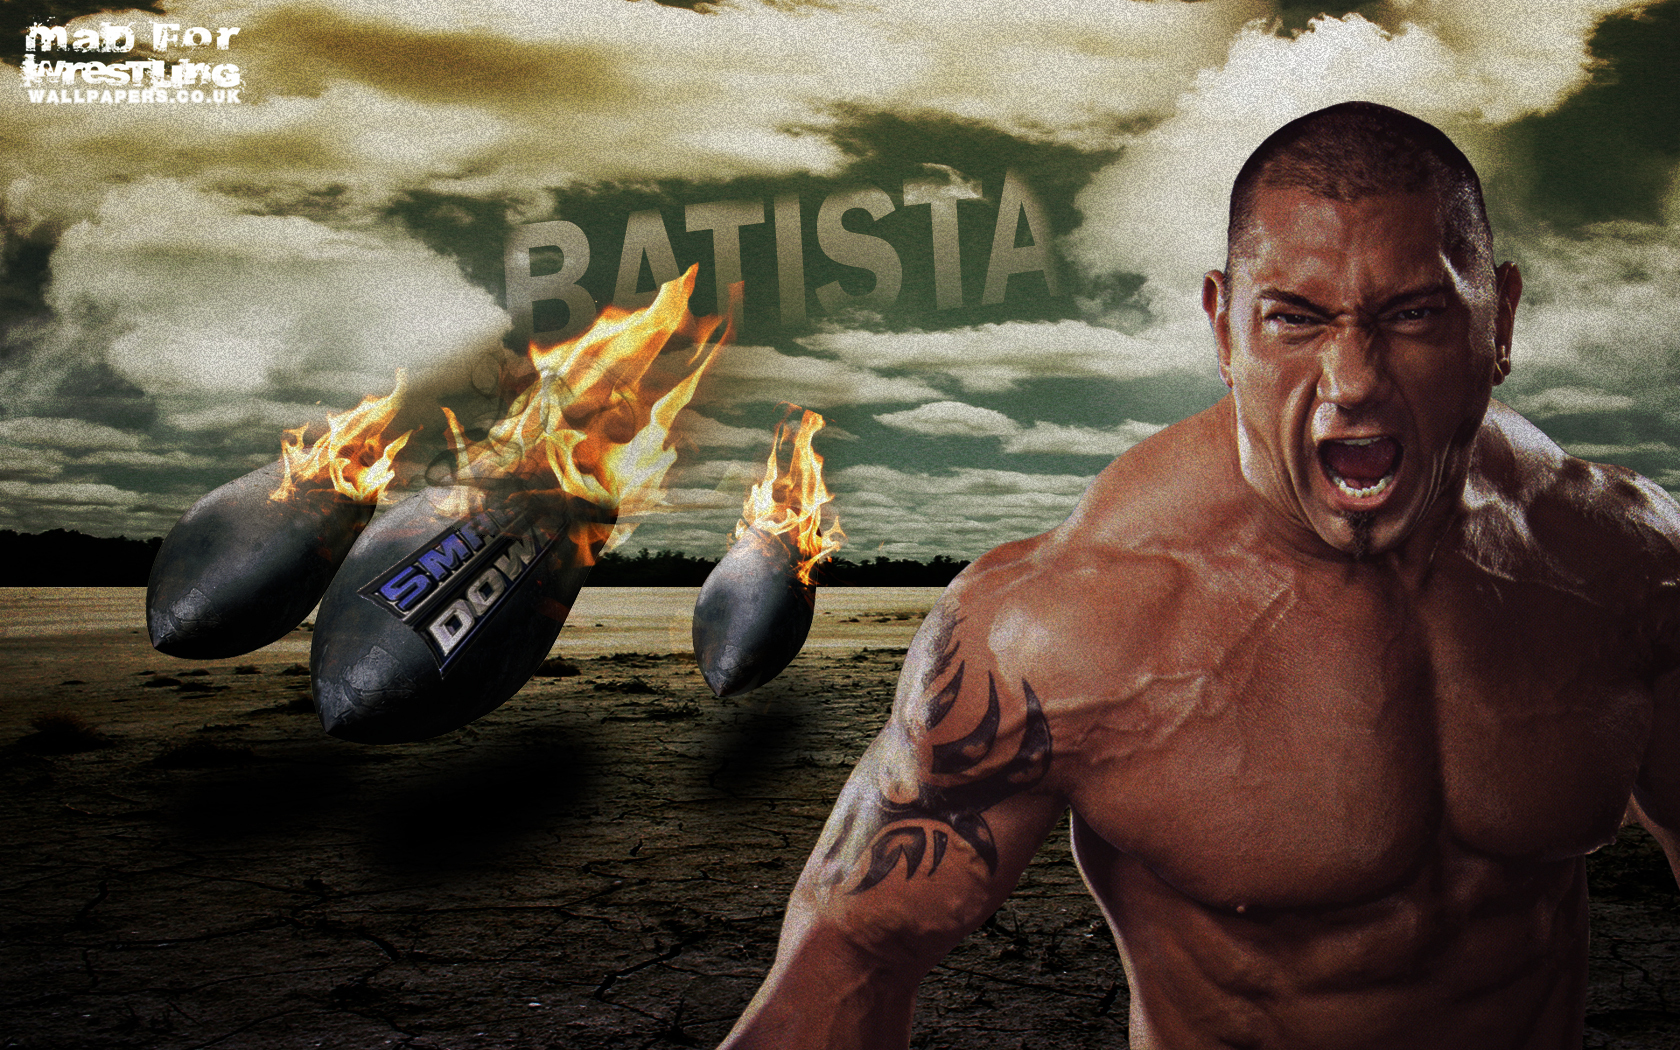 Wwe Raw Image Batista Wallpaper Photos